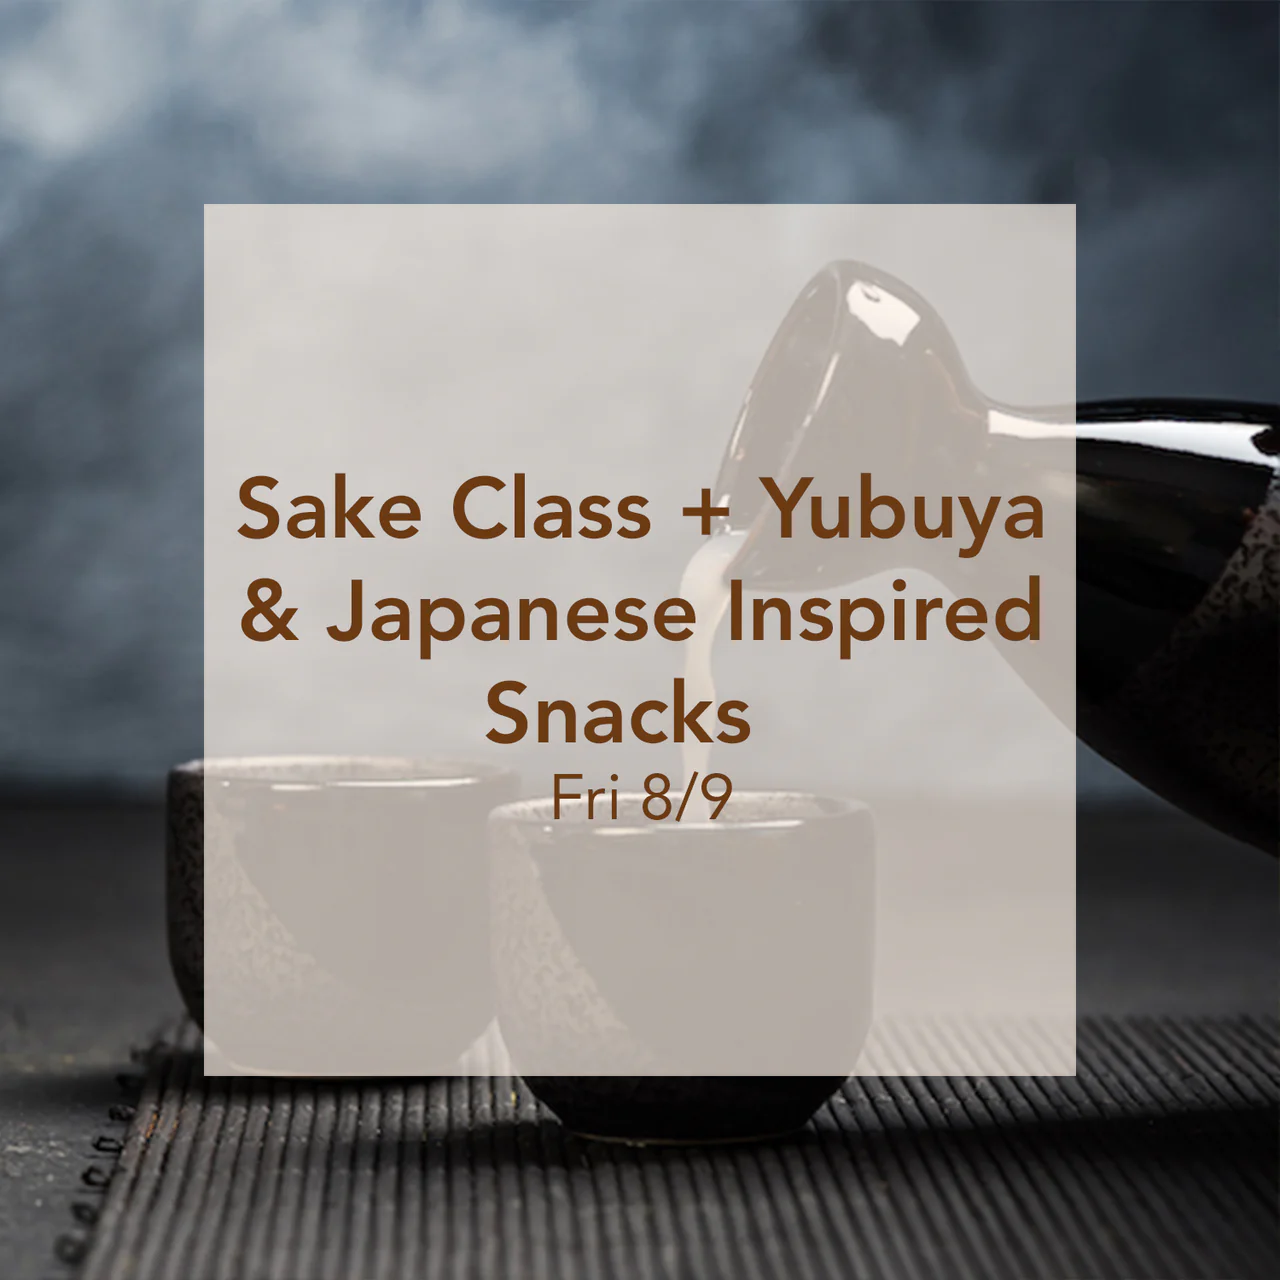 Sake Class + Yubuya & Japanese Inspired Snacks